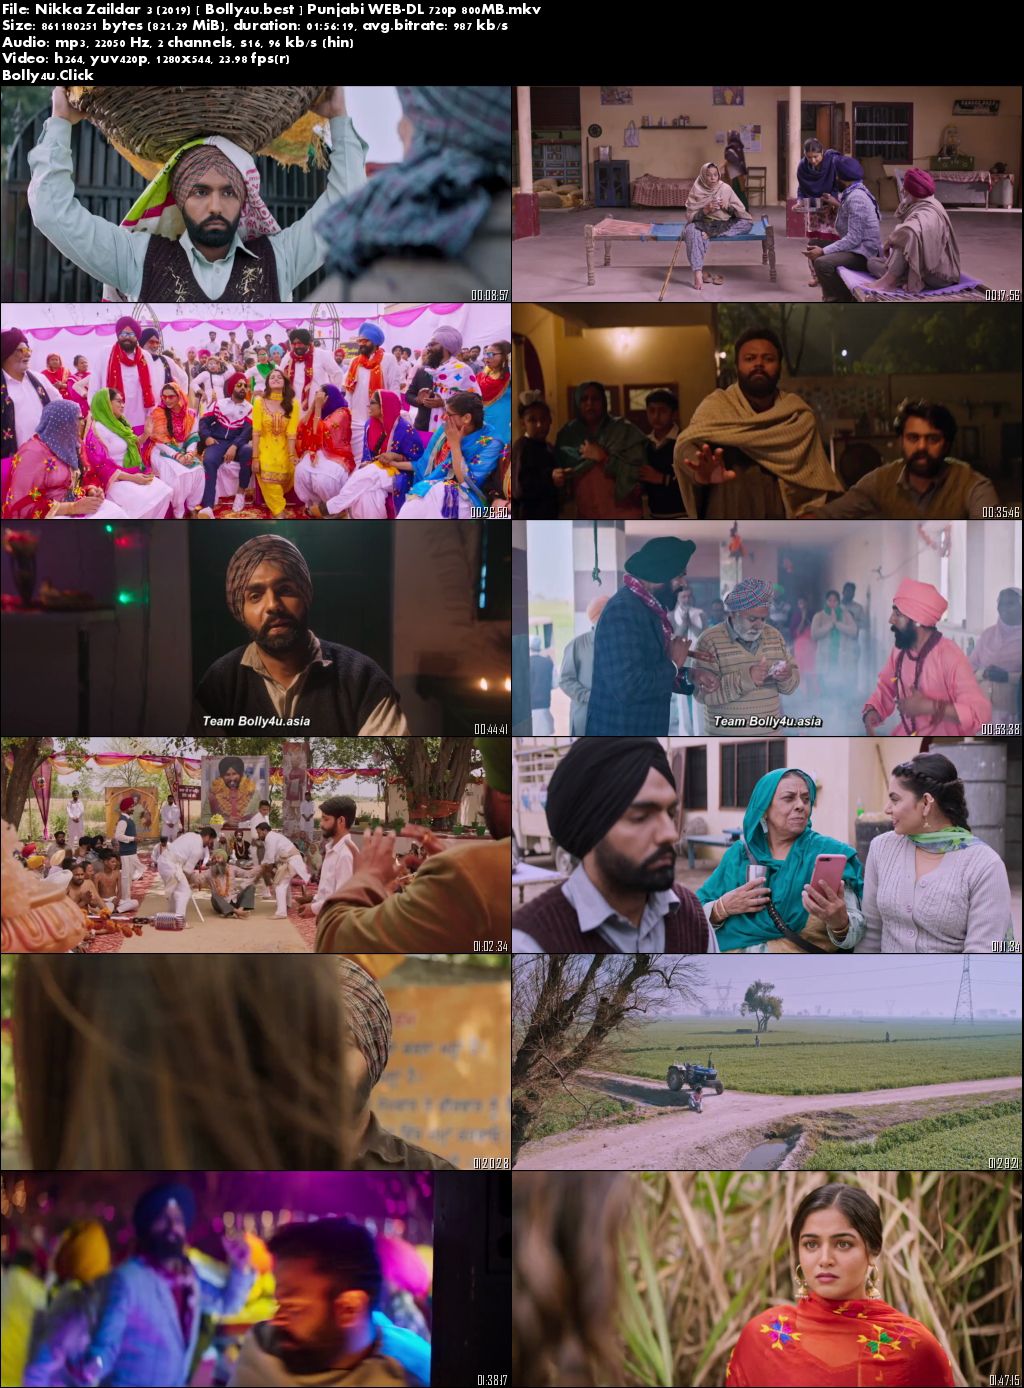 Nikka Zaildar 3 2019 WEB-DL 300Mb Punjabi 480p Download